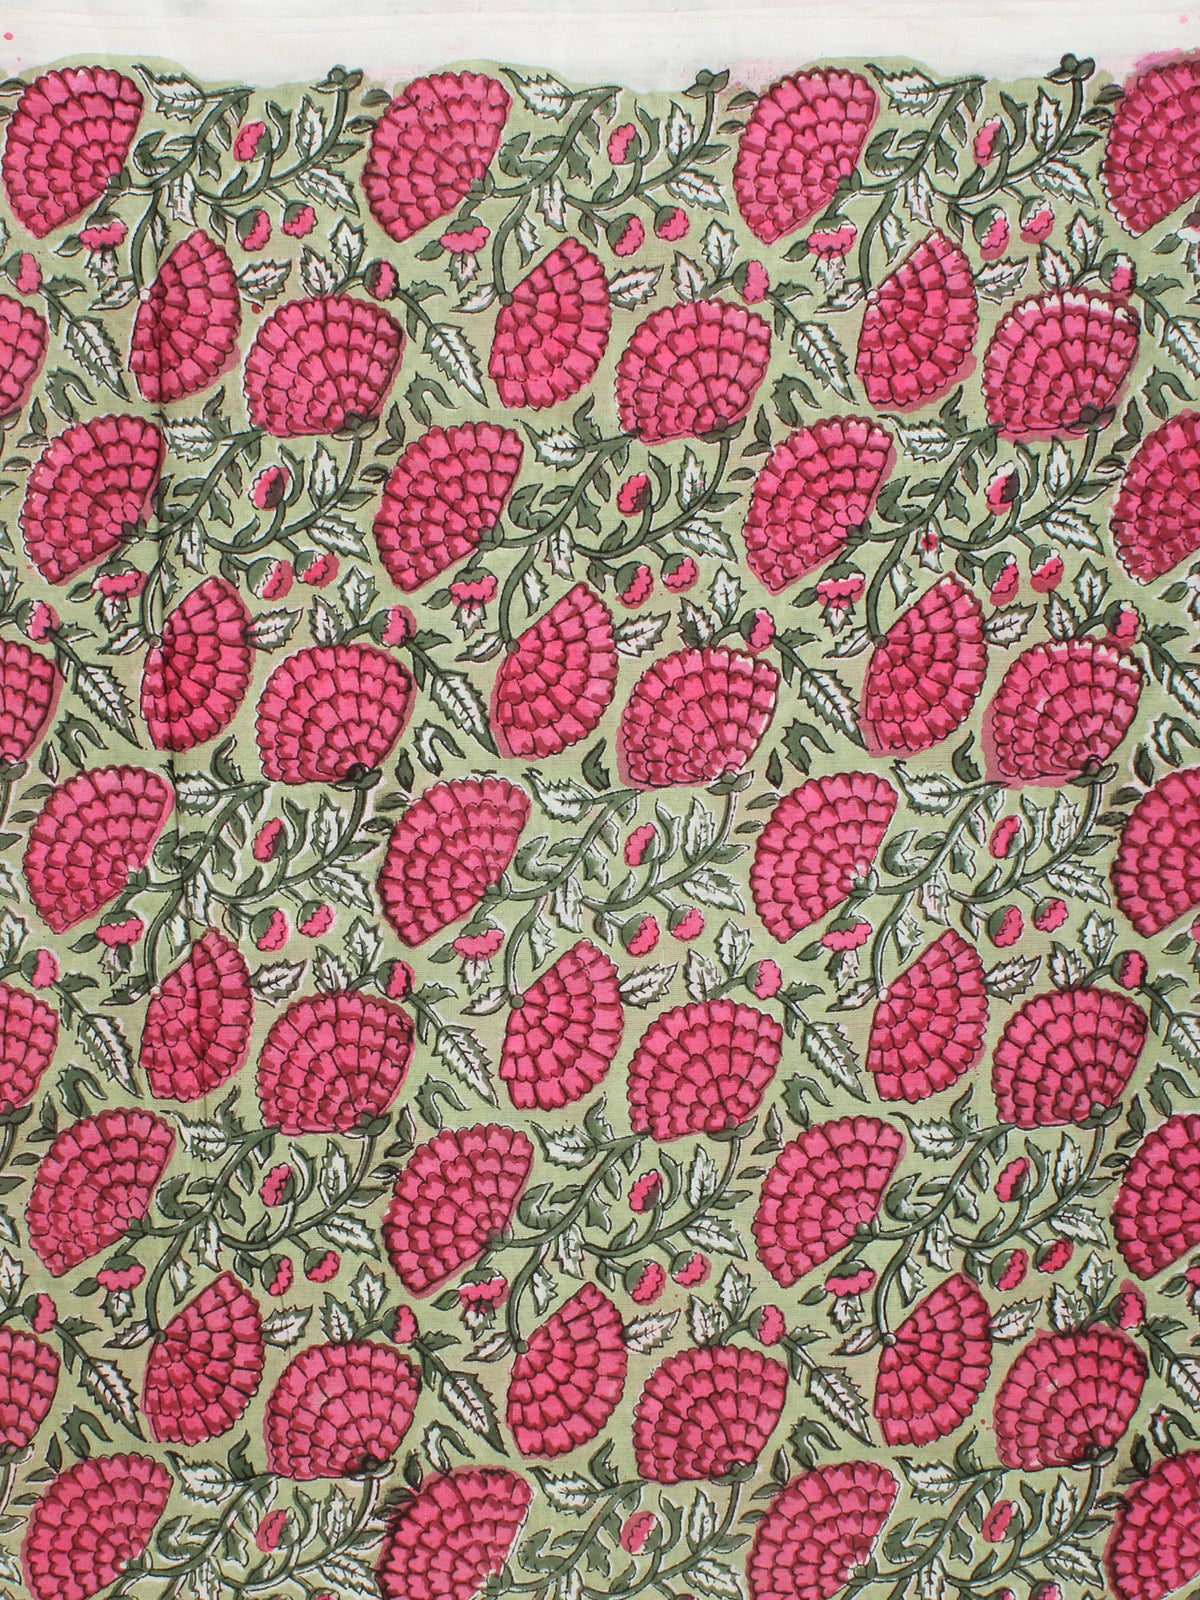 Pistachio Green Pink Hand Block Printed Cotton Fabric Per Meter - F001F2234